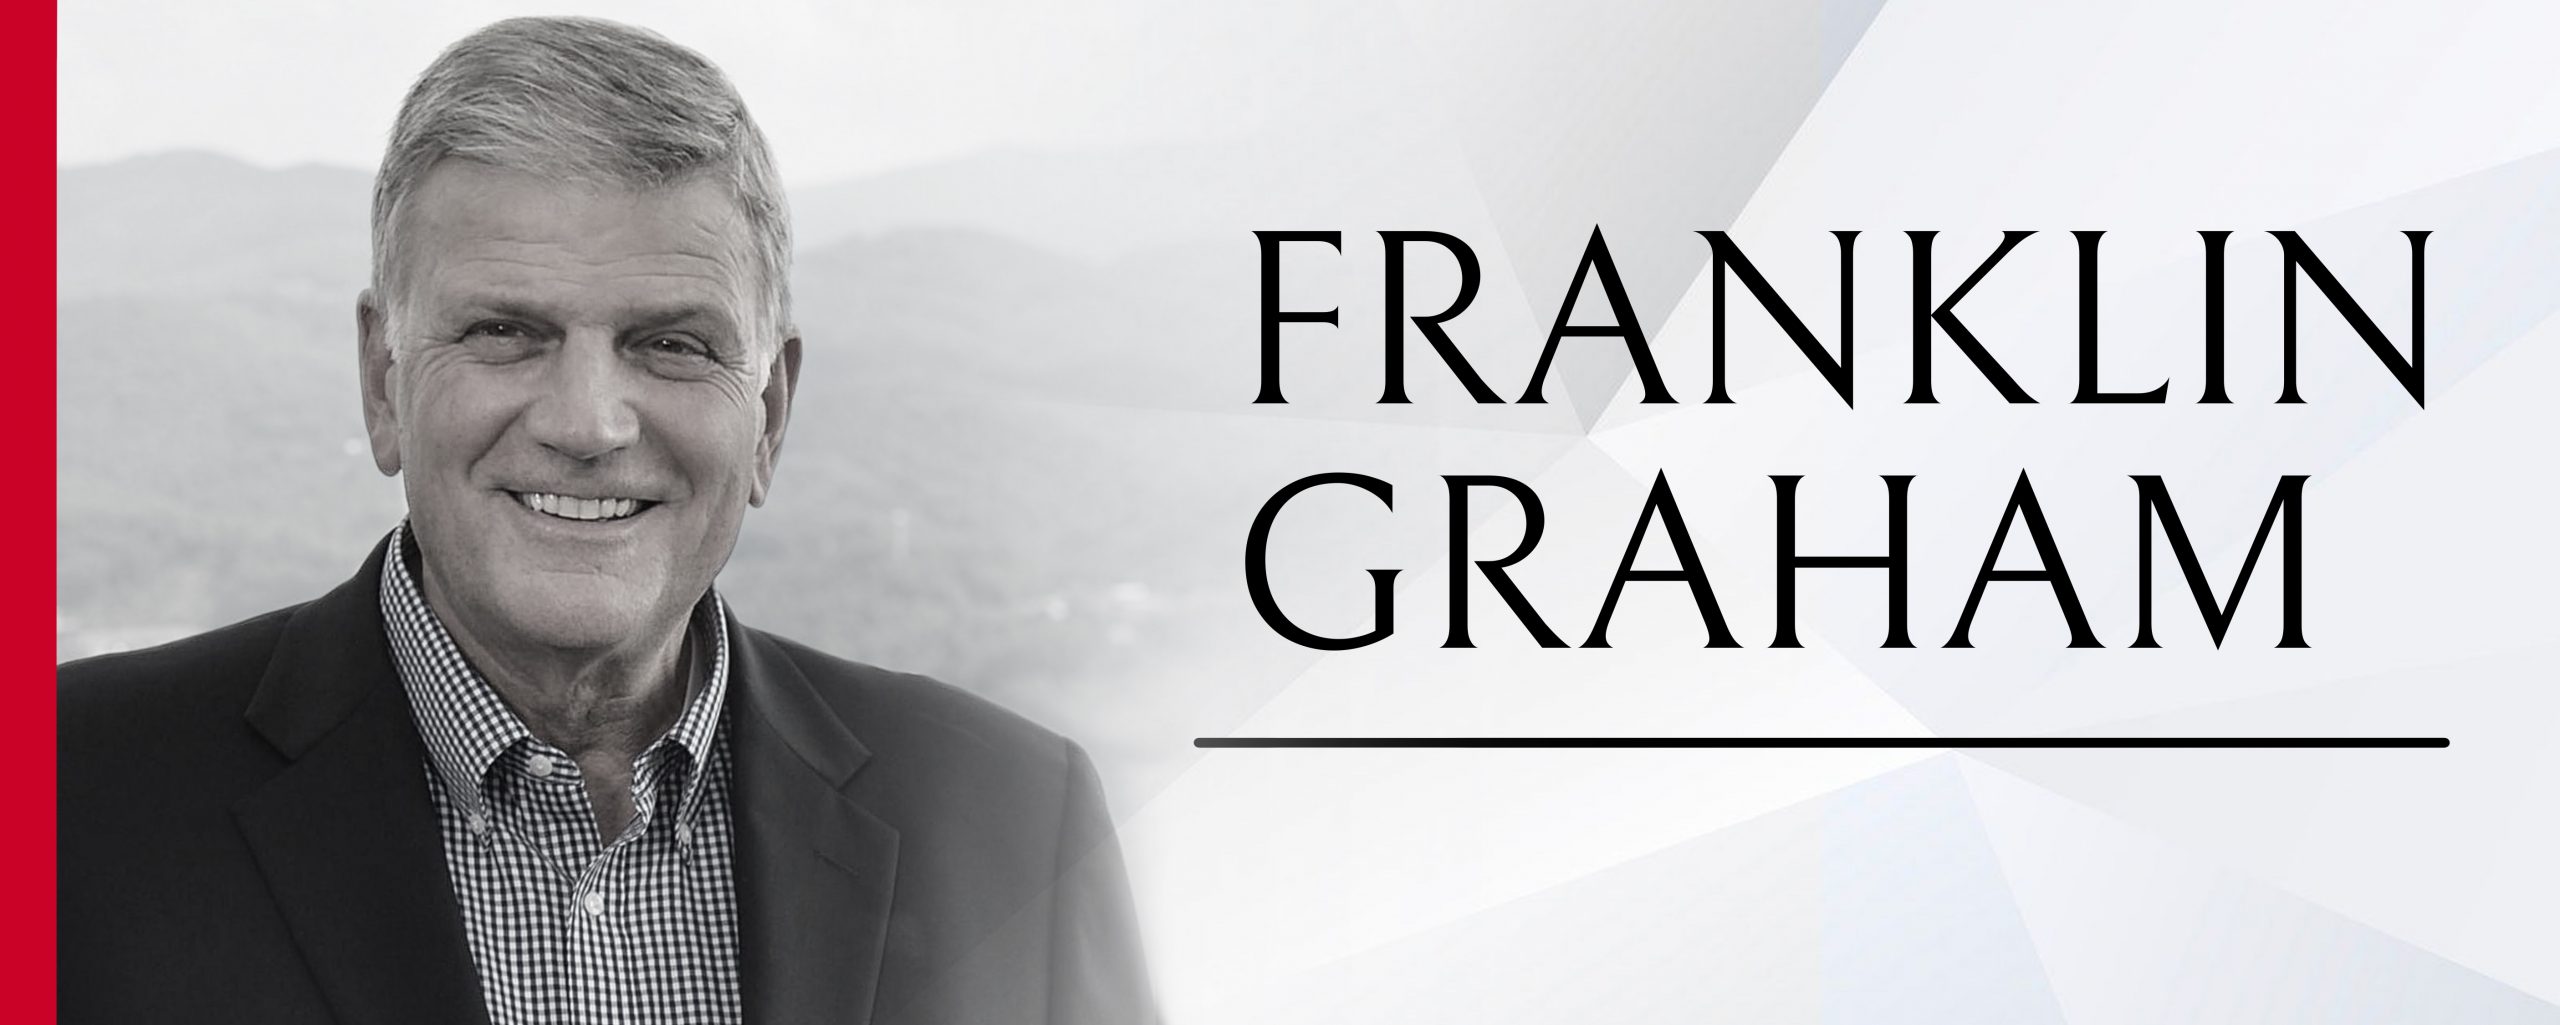 Franklin Graham